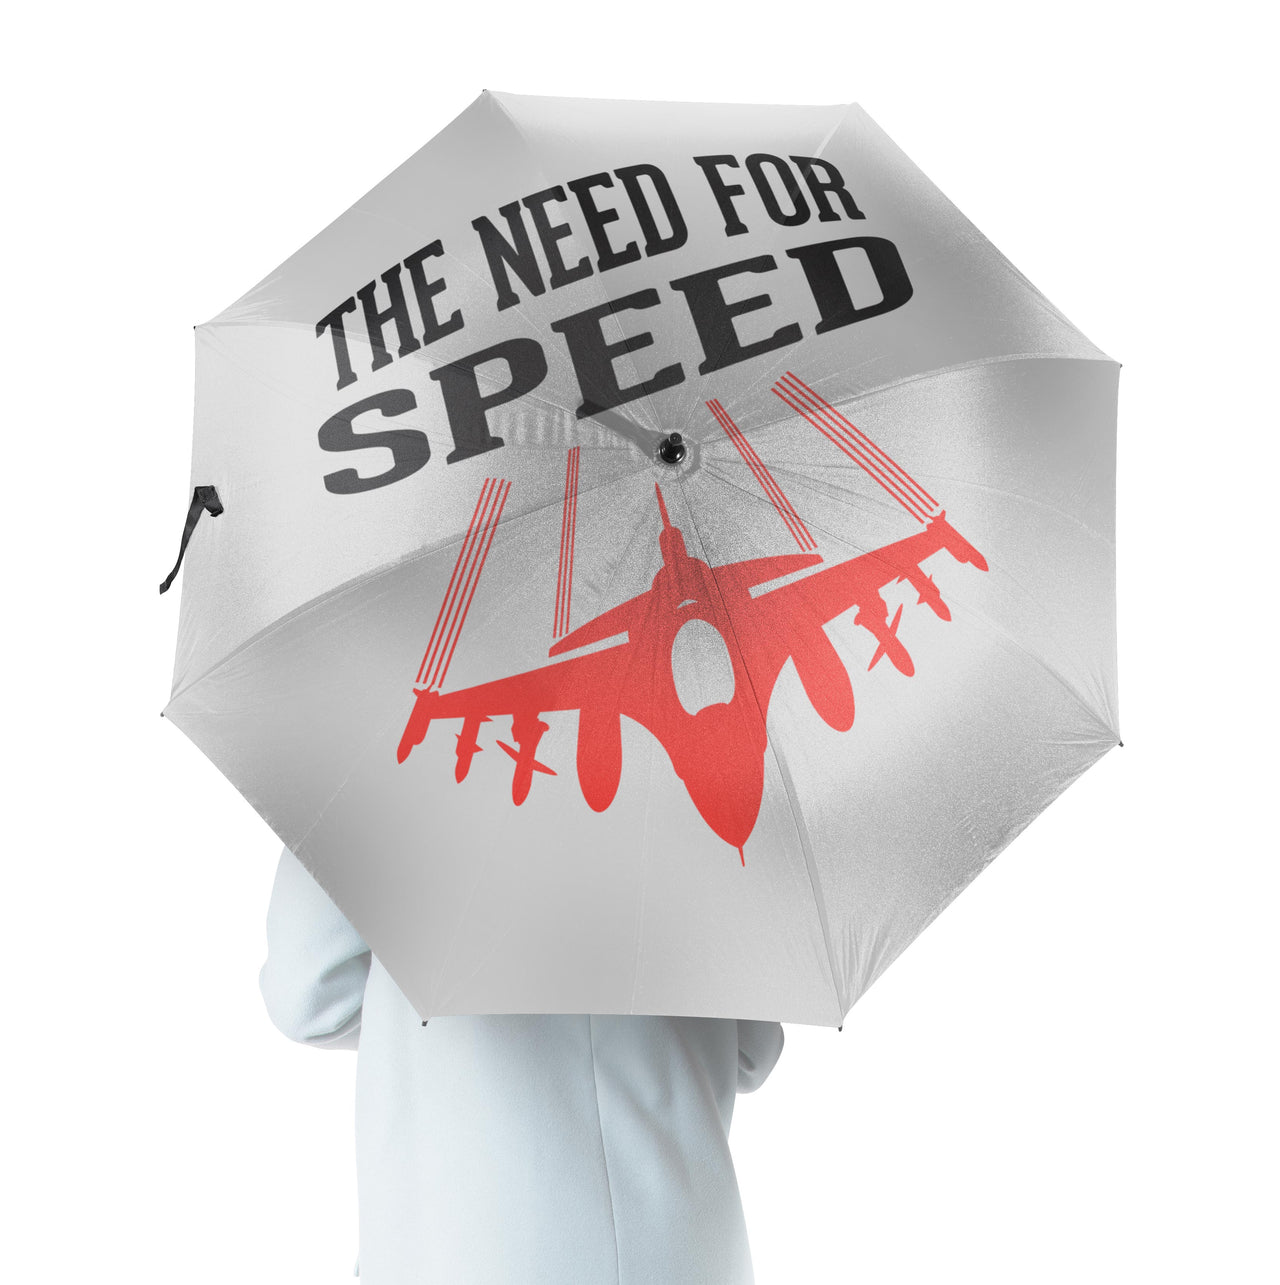 The Need For Speed Designed Umbrella